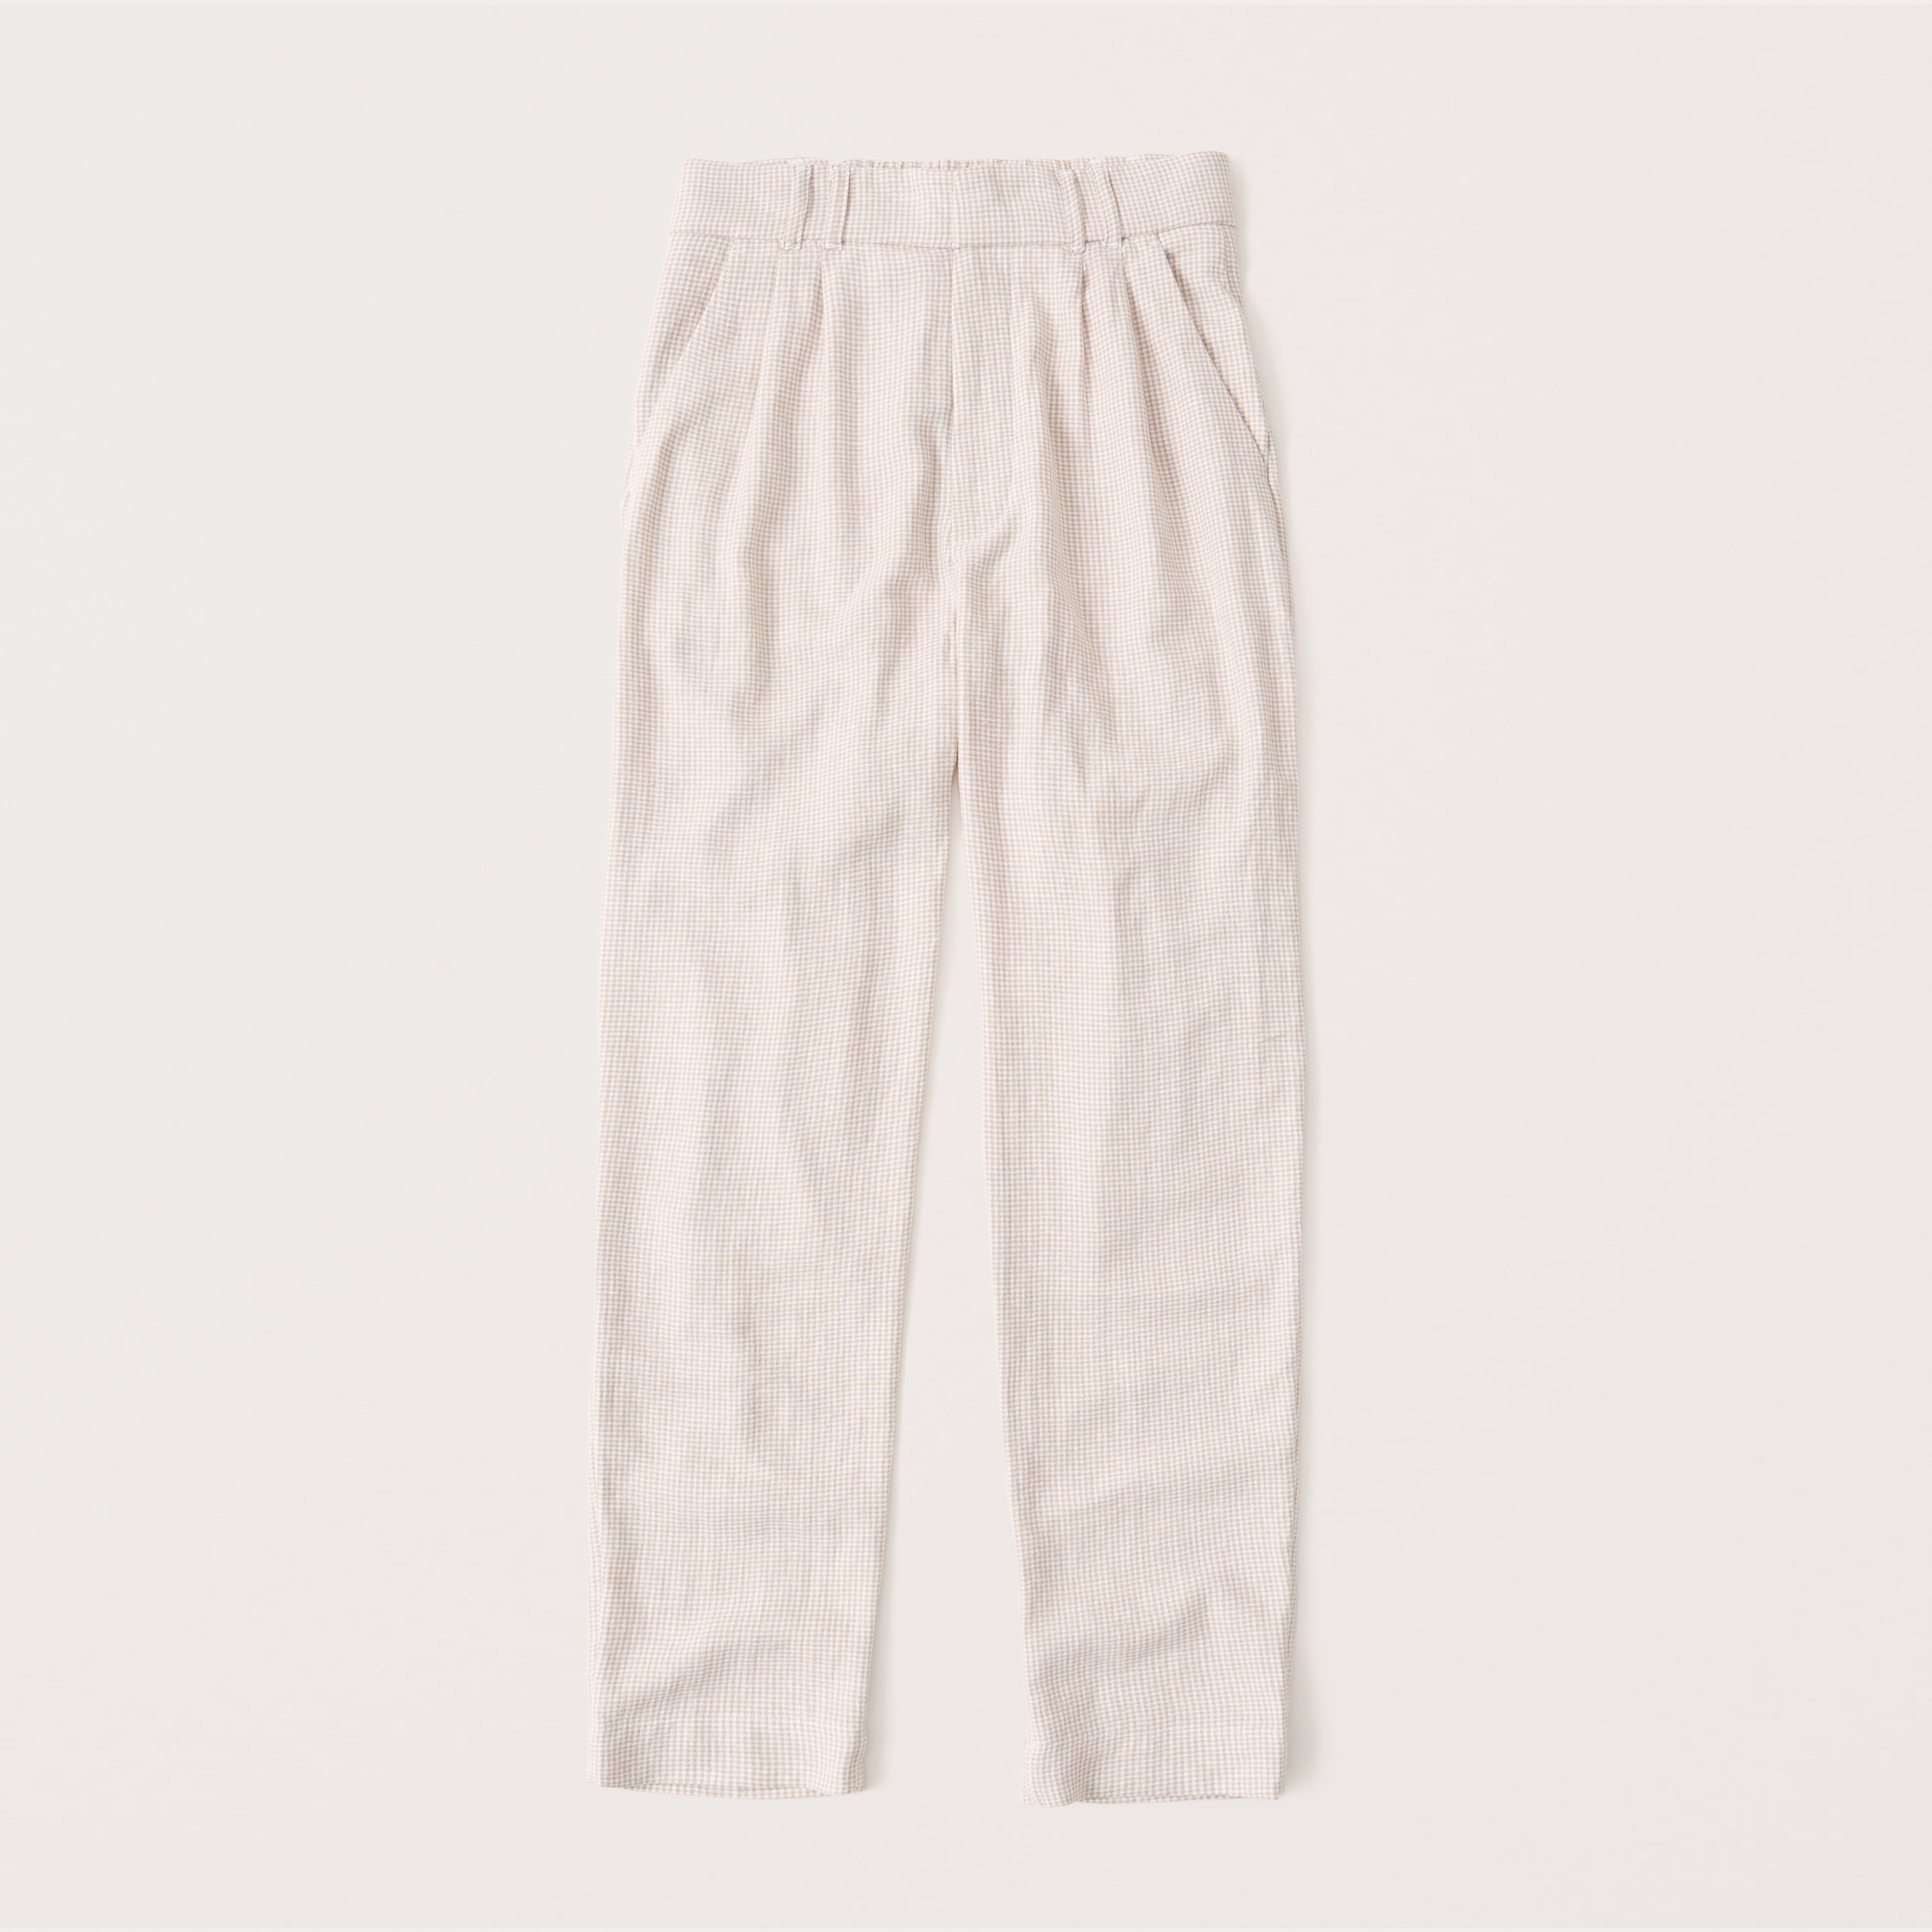 Women's Linen-Blend Pleated Taper Pants 